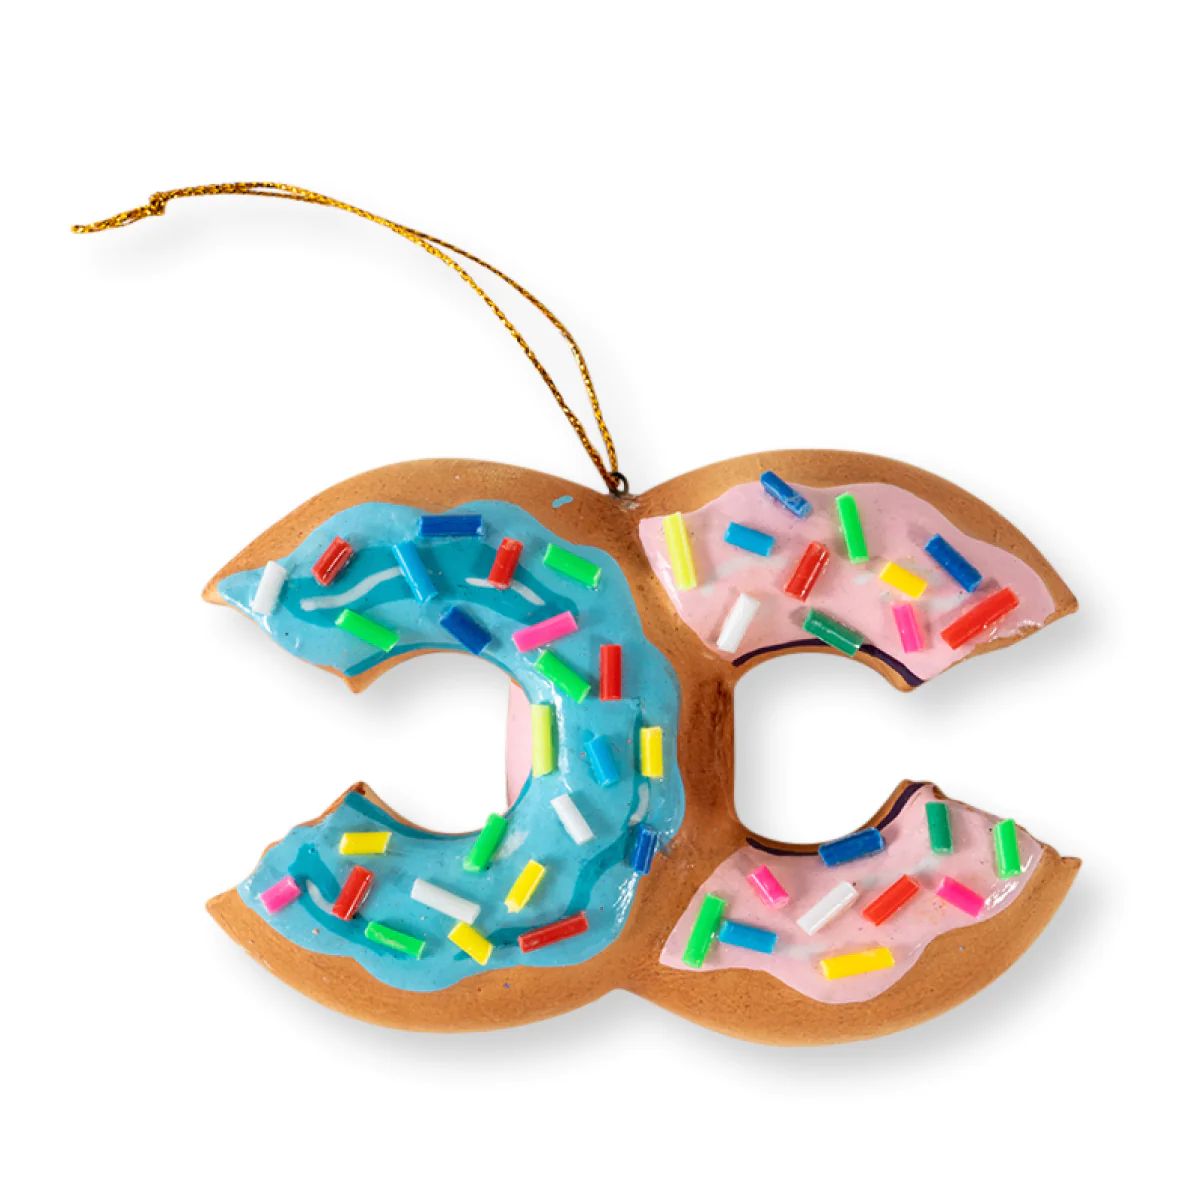 High Fashion Donut Ornament | Furbish Studio